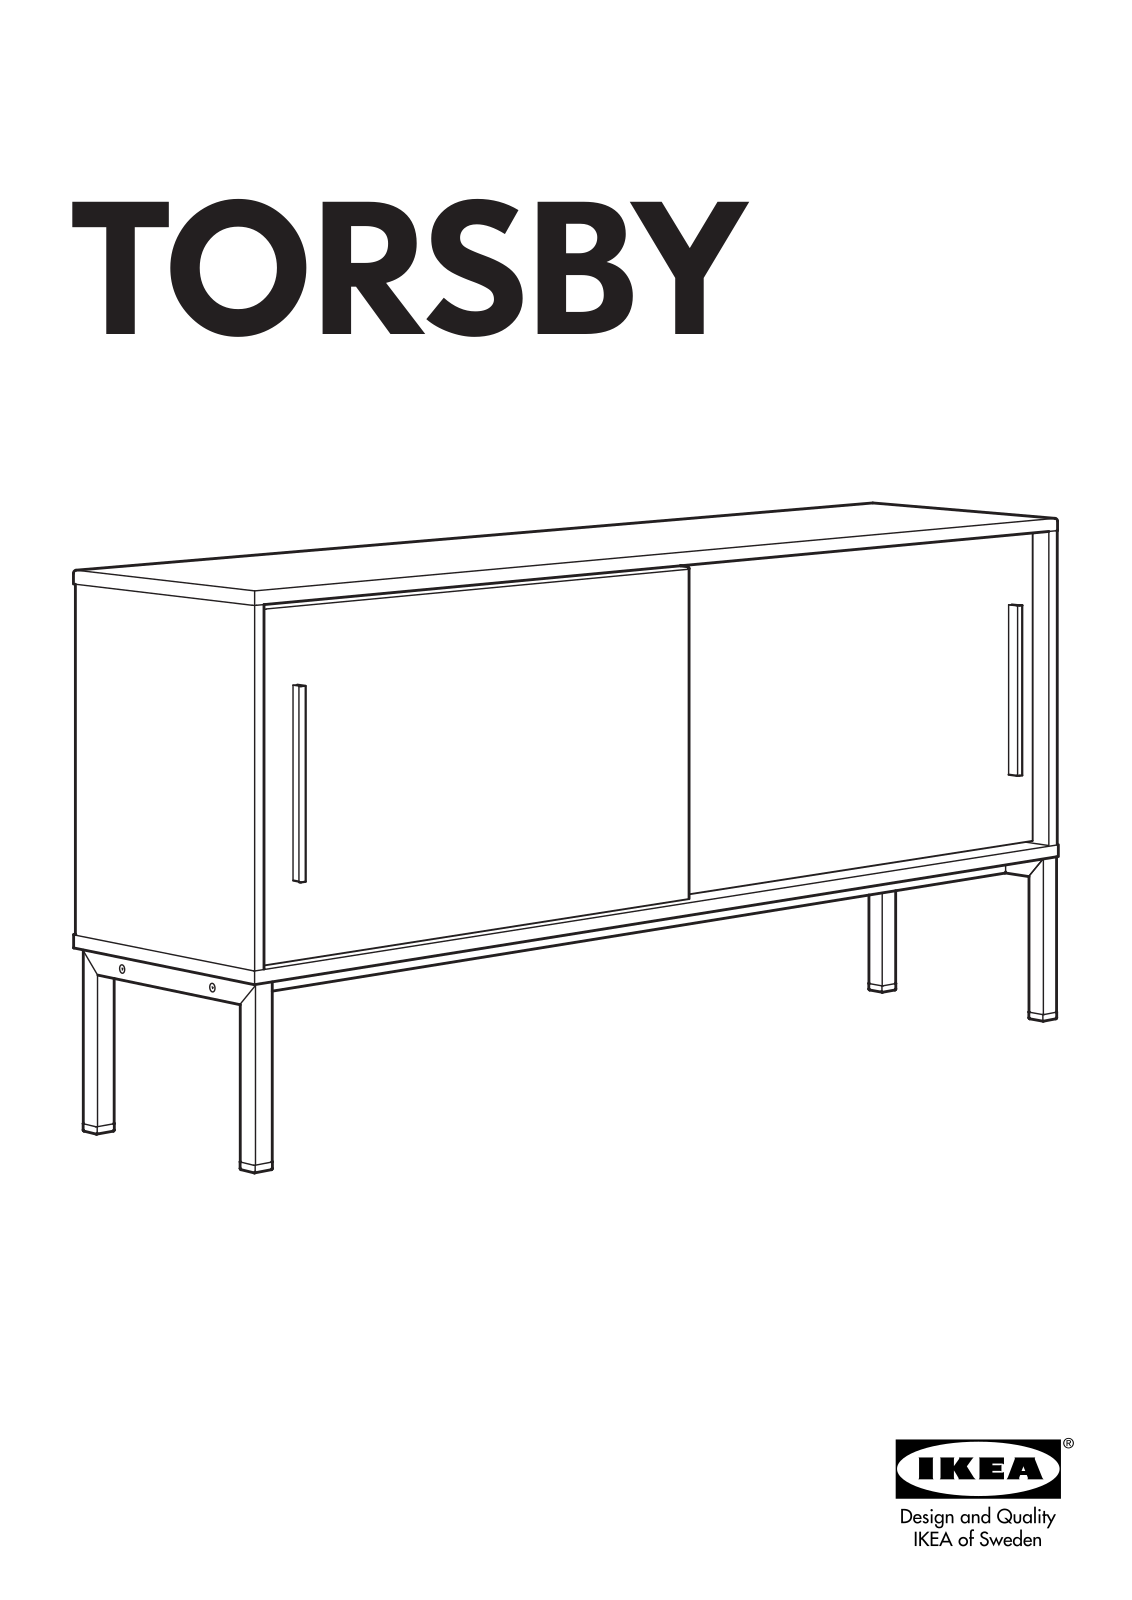 IKEA TORSBY SIDEBOARD 59X29 18 Assembly Instruction